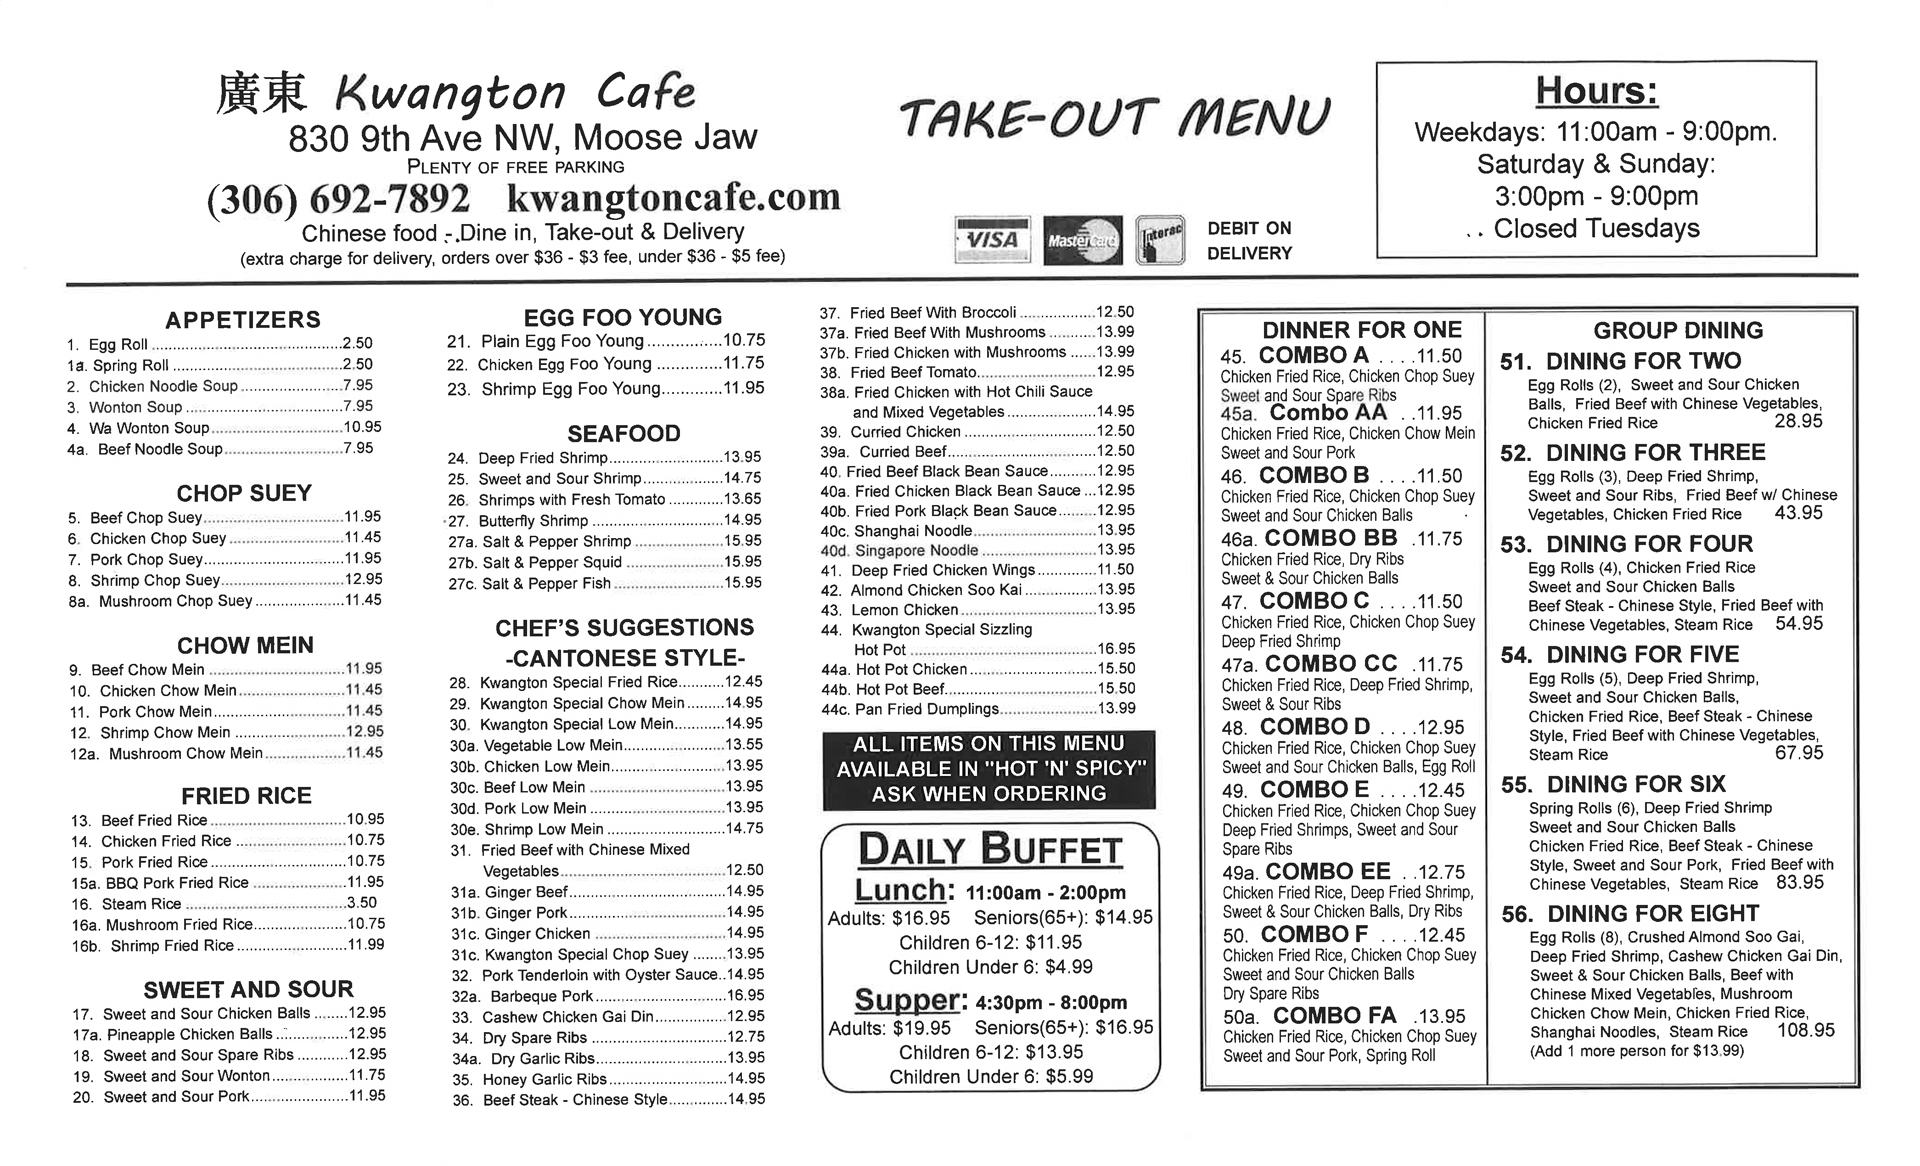 Kwangton Cafe Menu Image